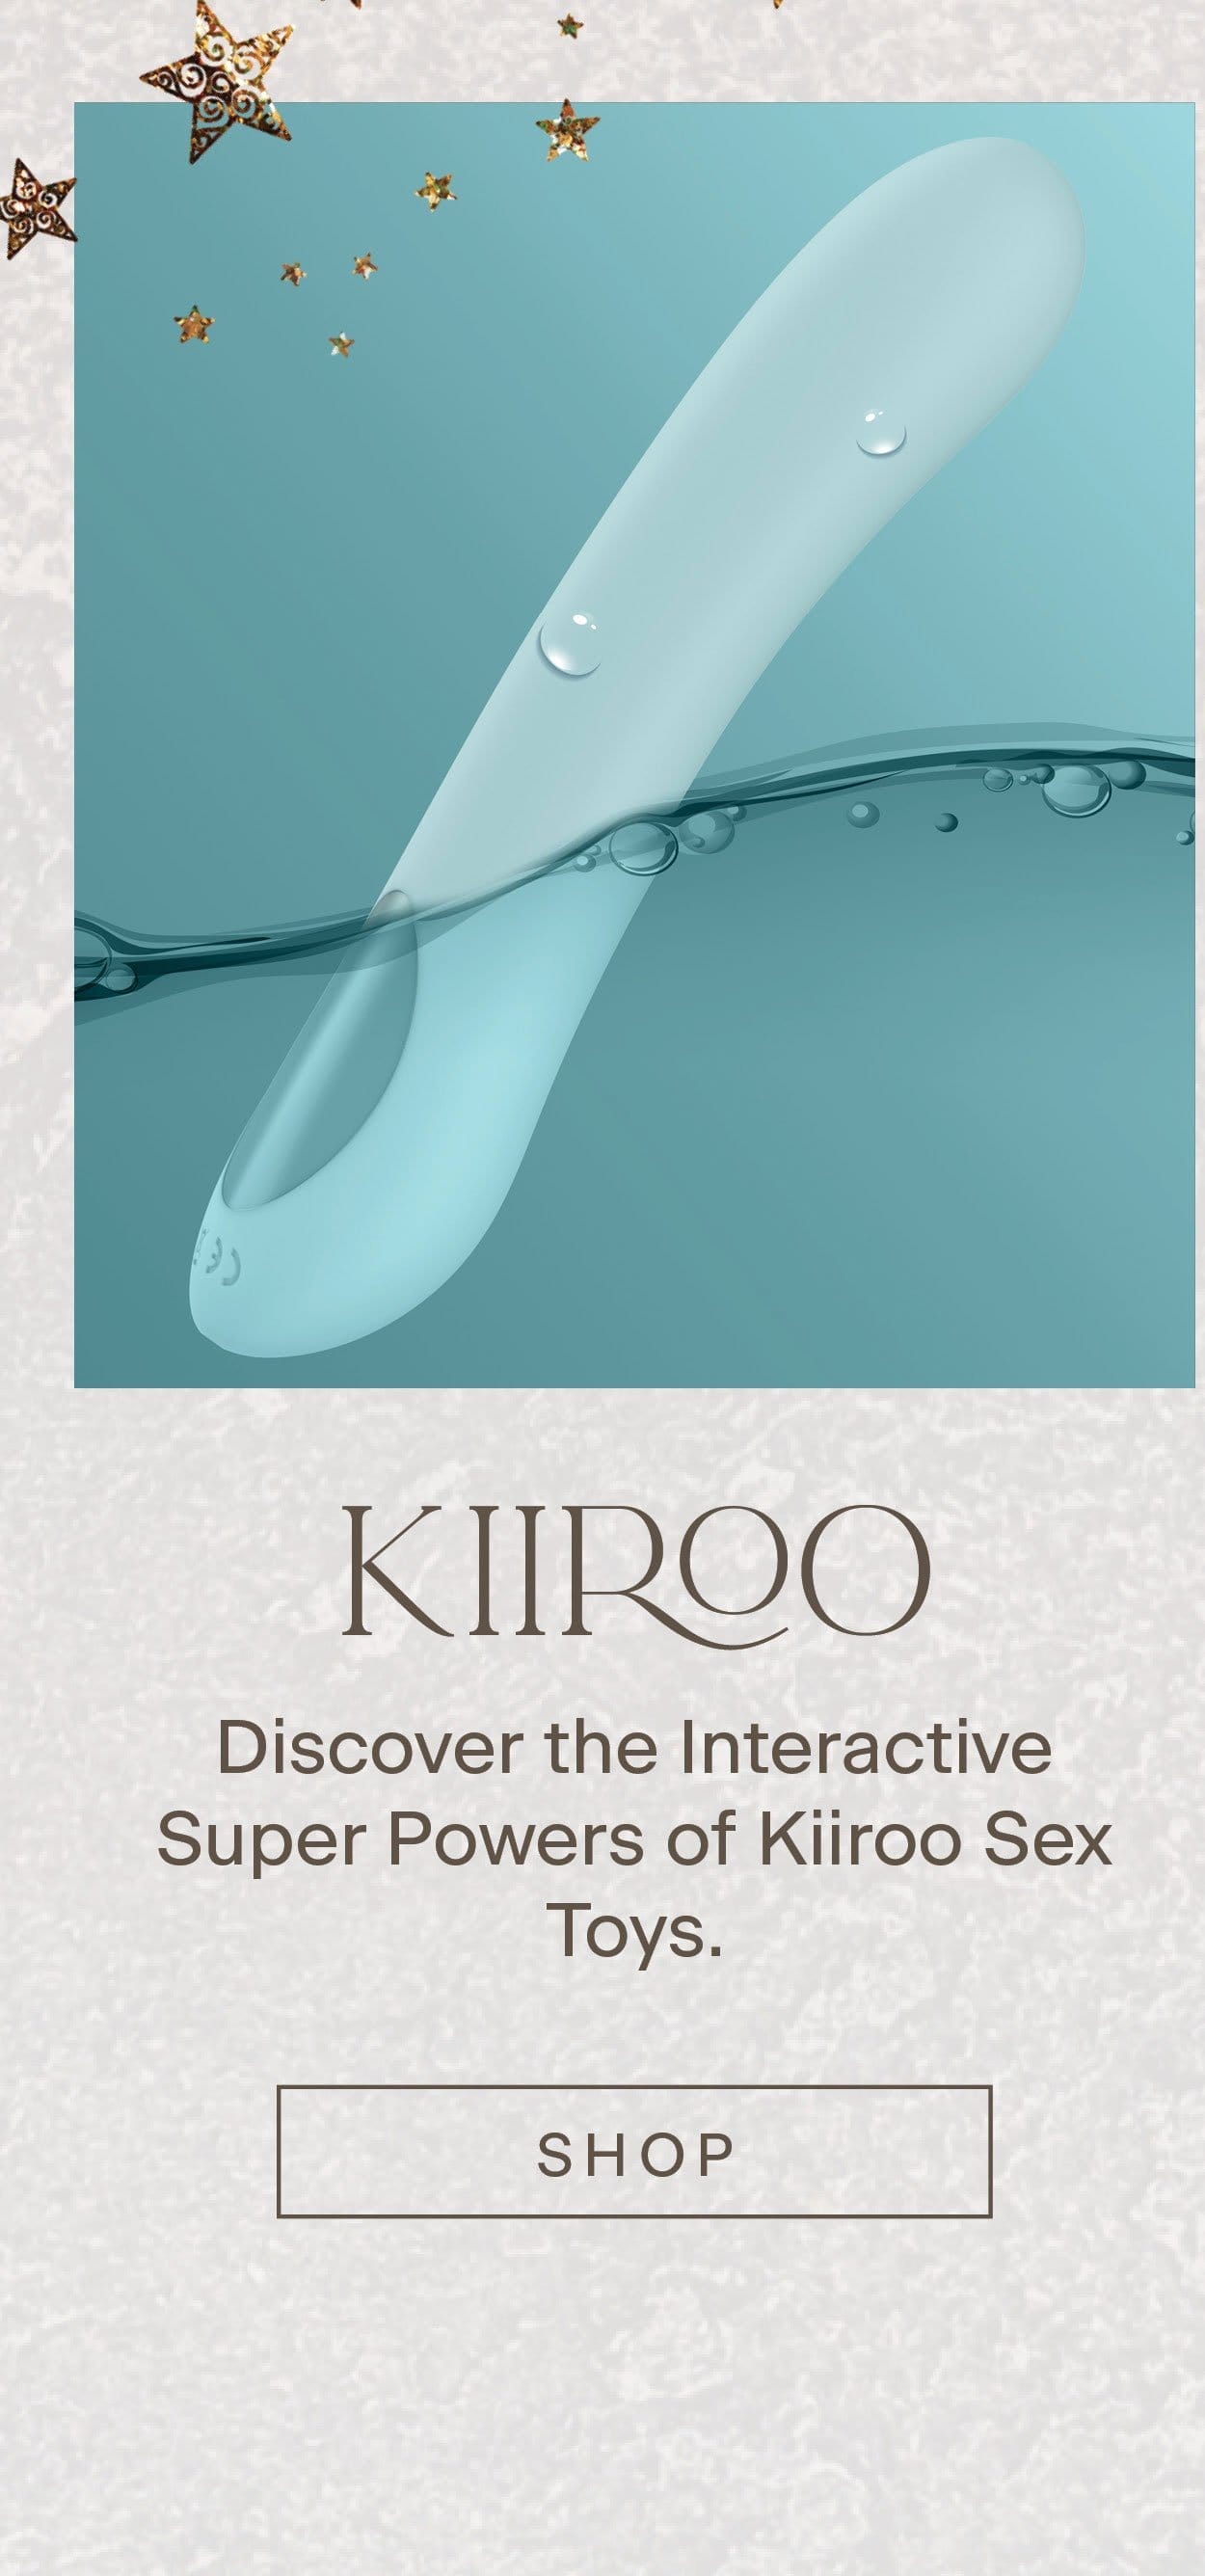 Kiiroo – Discover the Interactive Super Powers of Kiiroo Sex Toys.